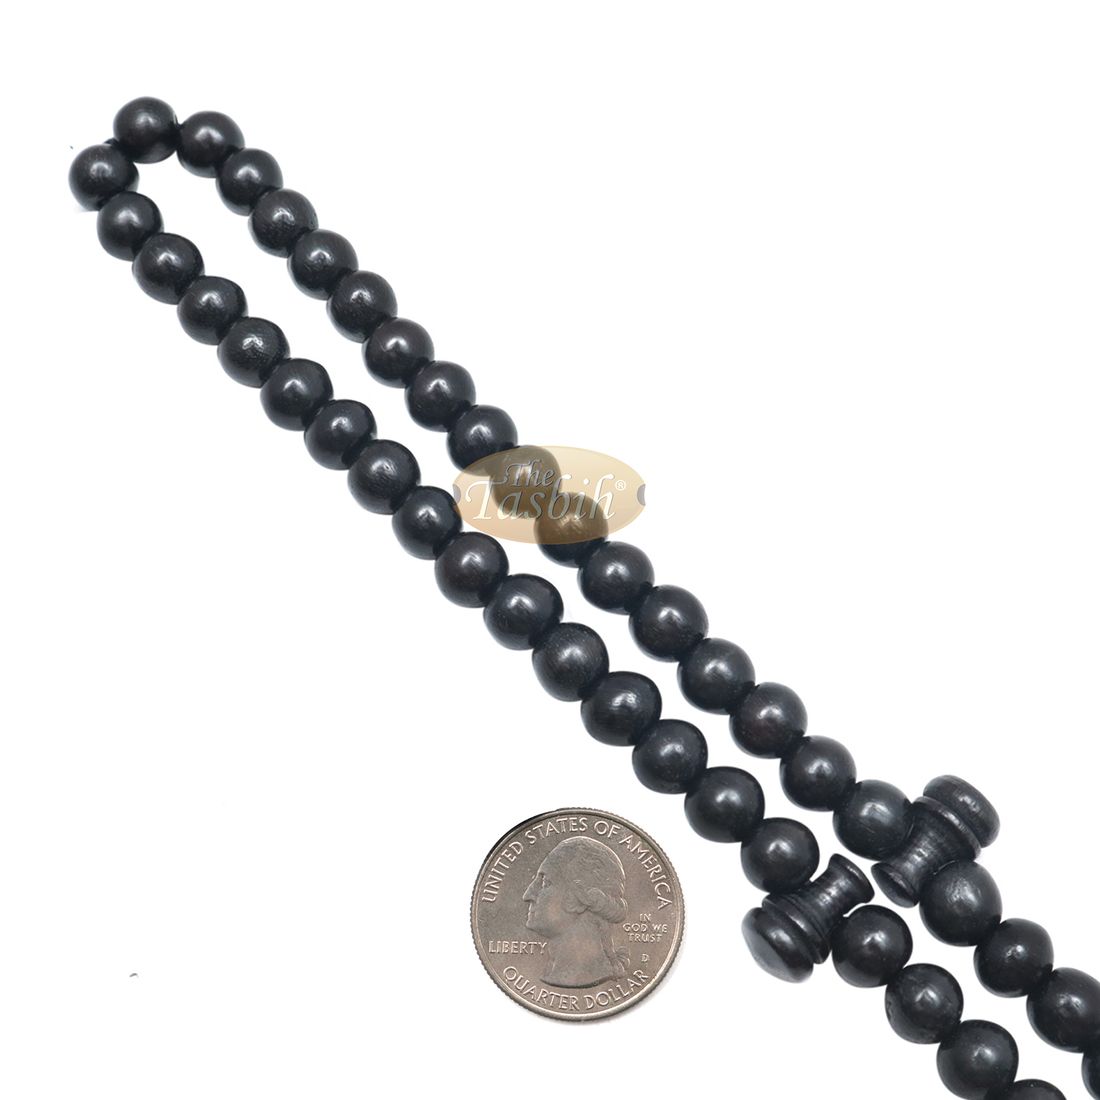 Handcrafted 8mm Black Citrus Wood Tasbih 99-beads with Black Tassel